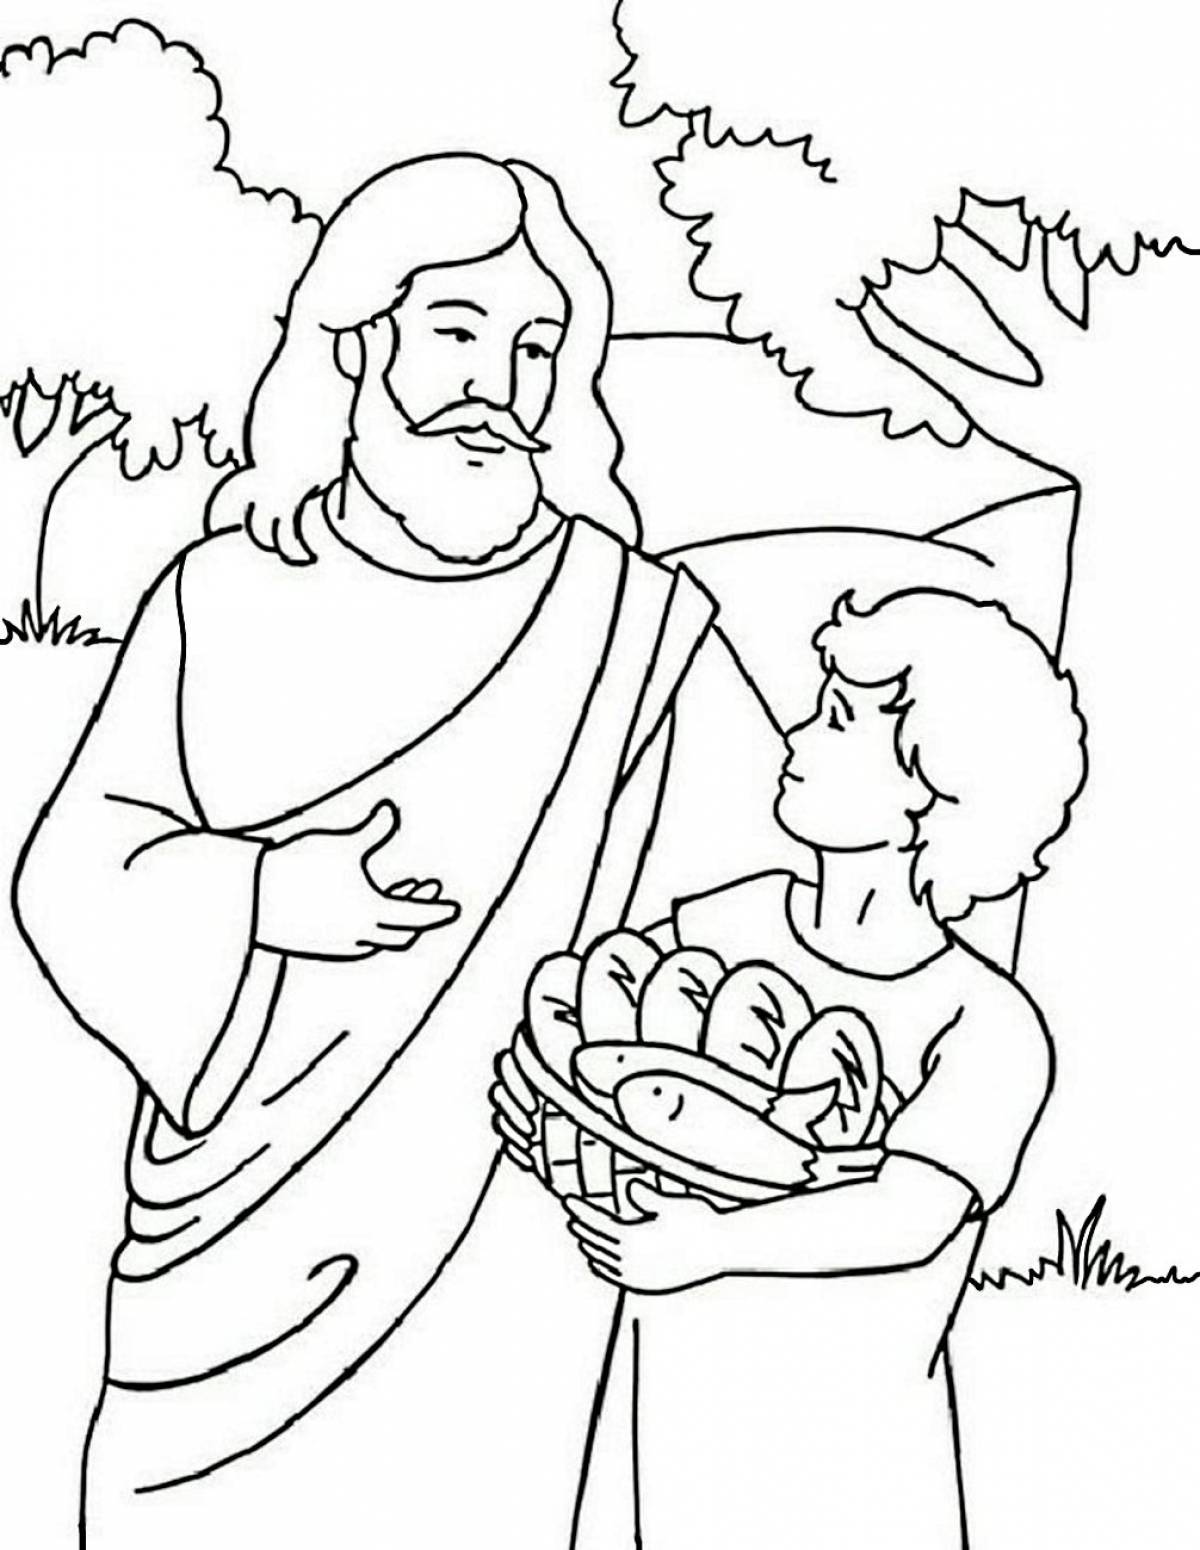 Children's bible #5